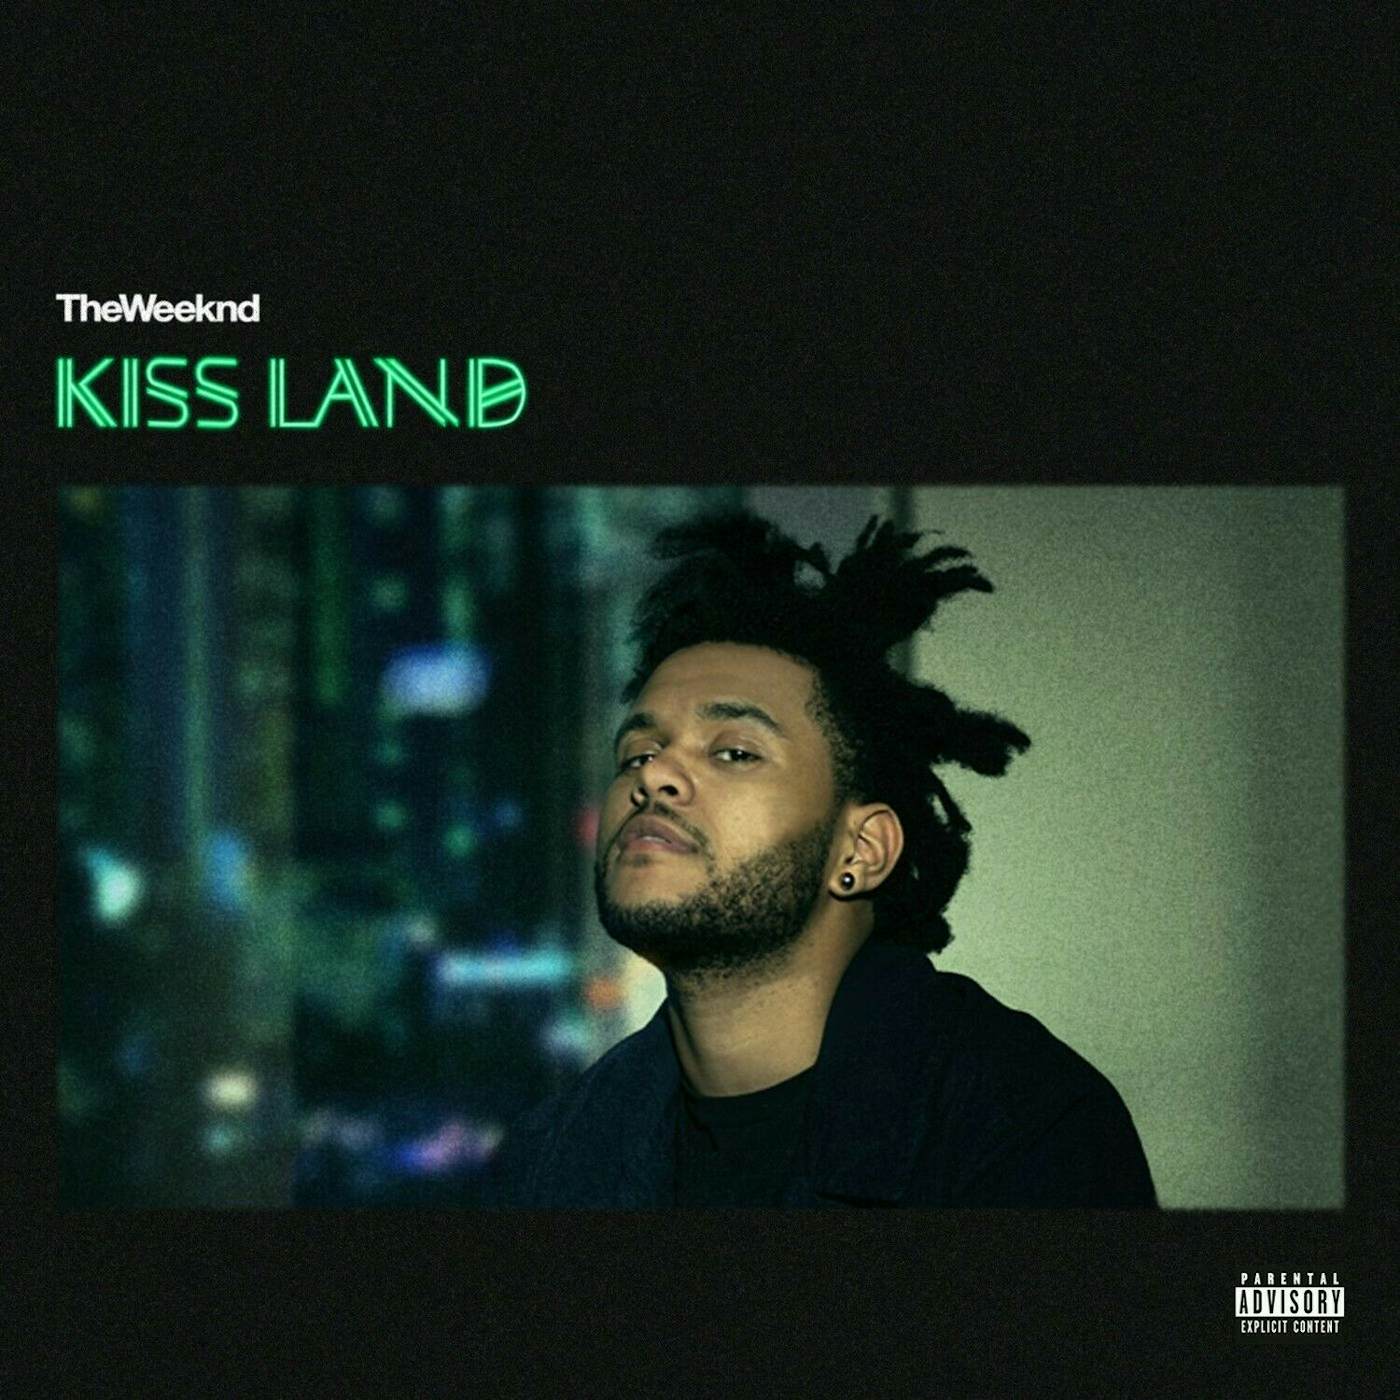 The Weeknd LP Vinyl Record - Kiss Land